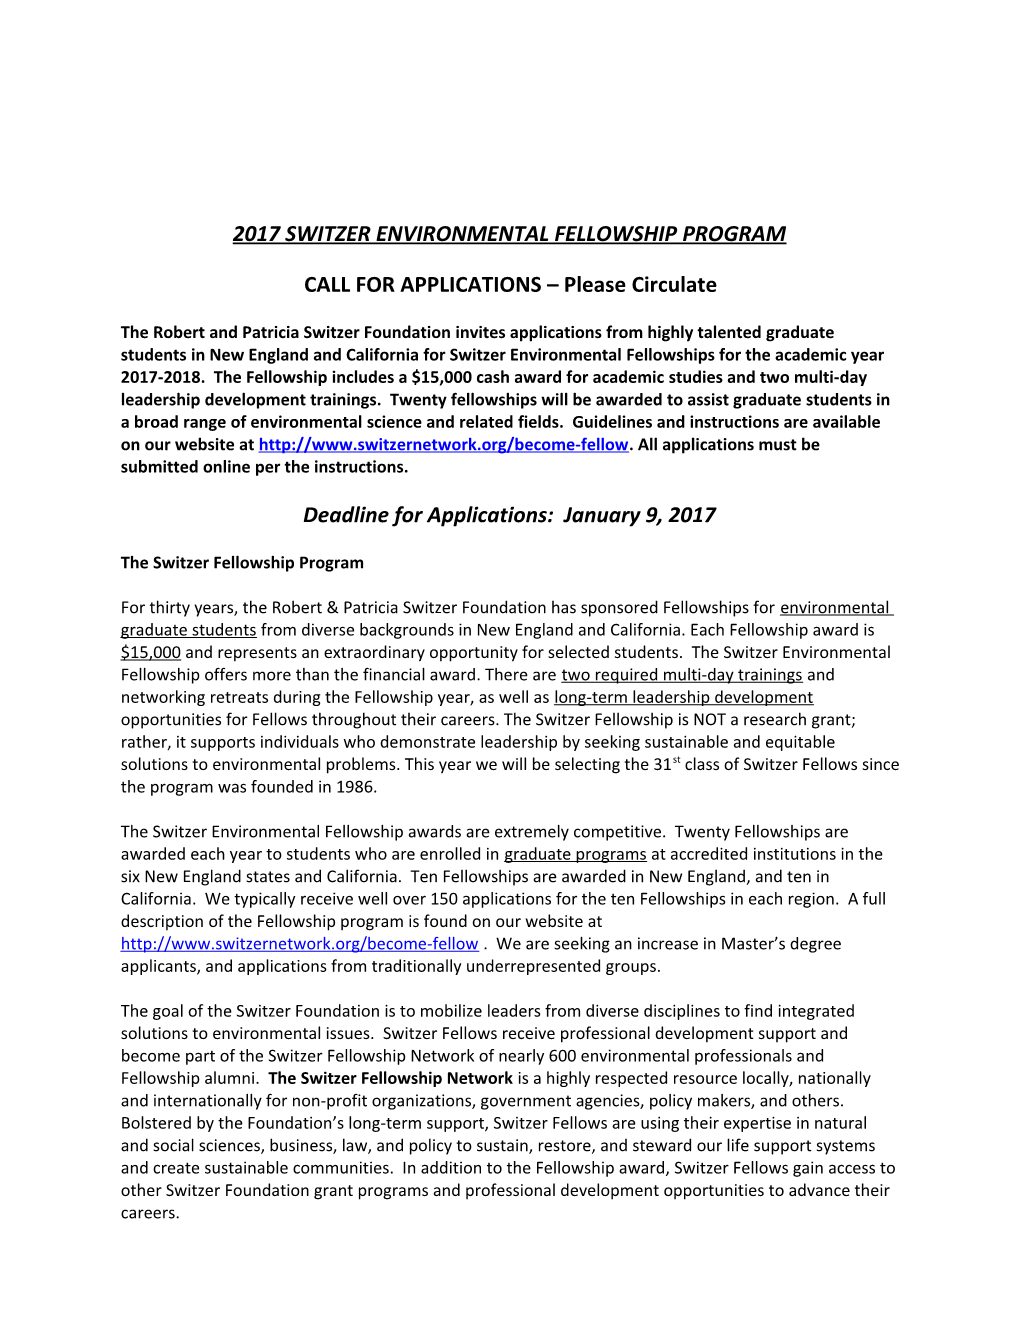 2017Switzer Environmental Fellowship Program